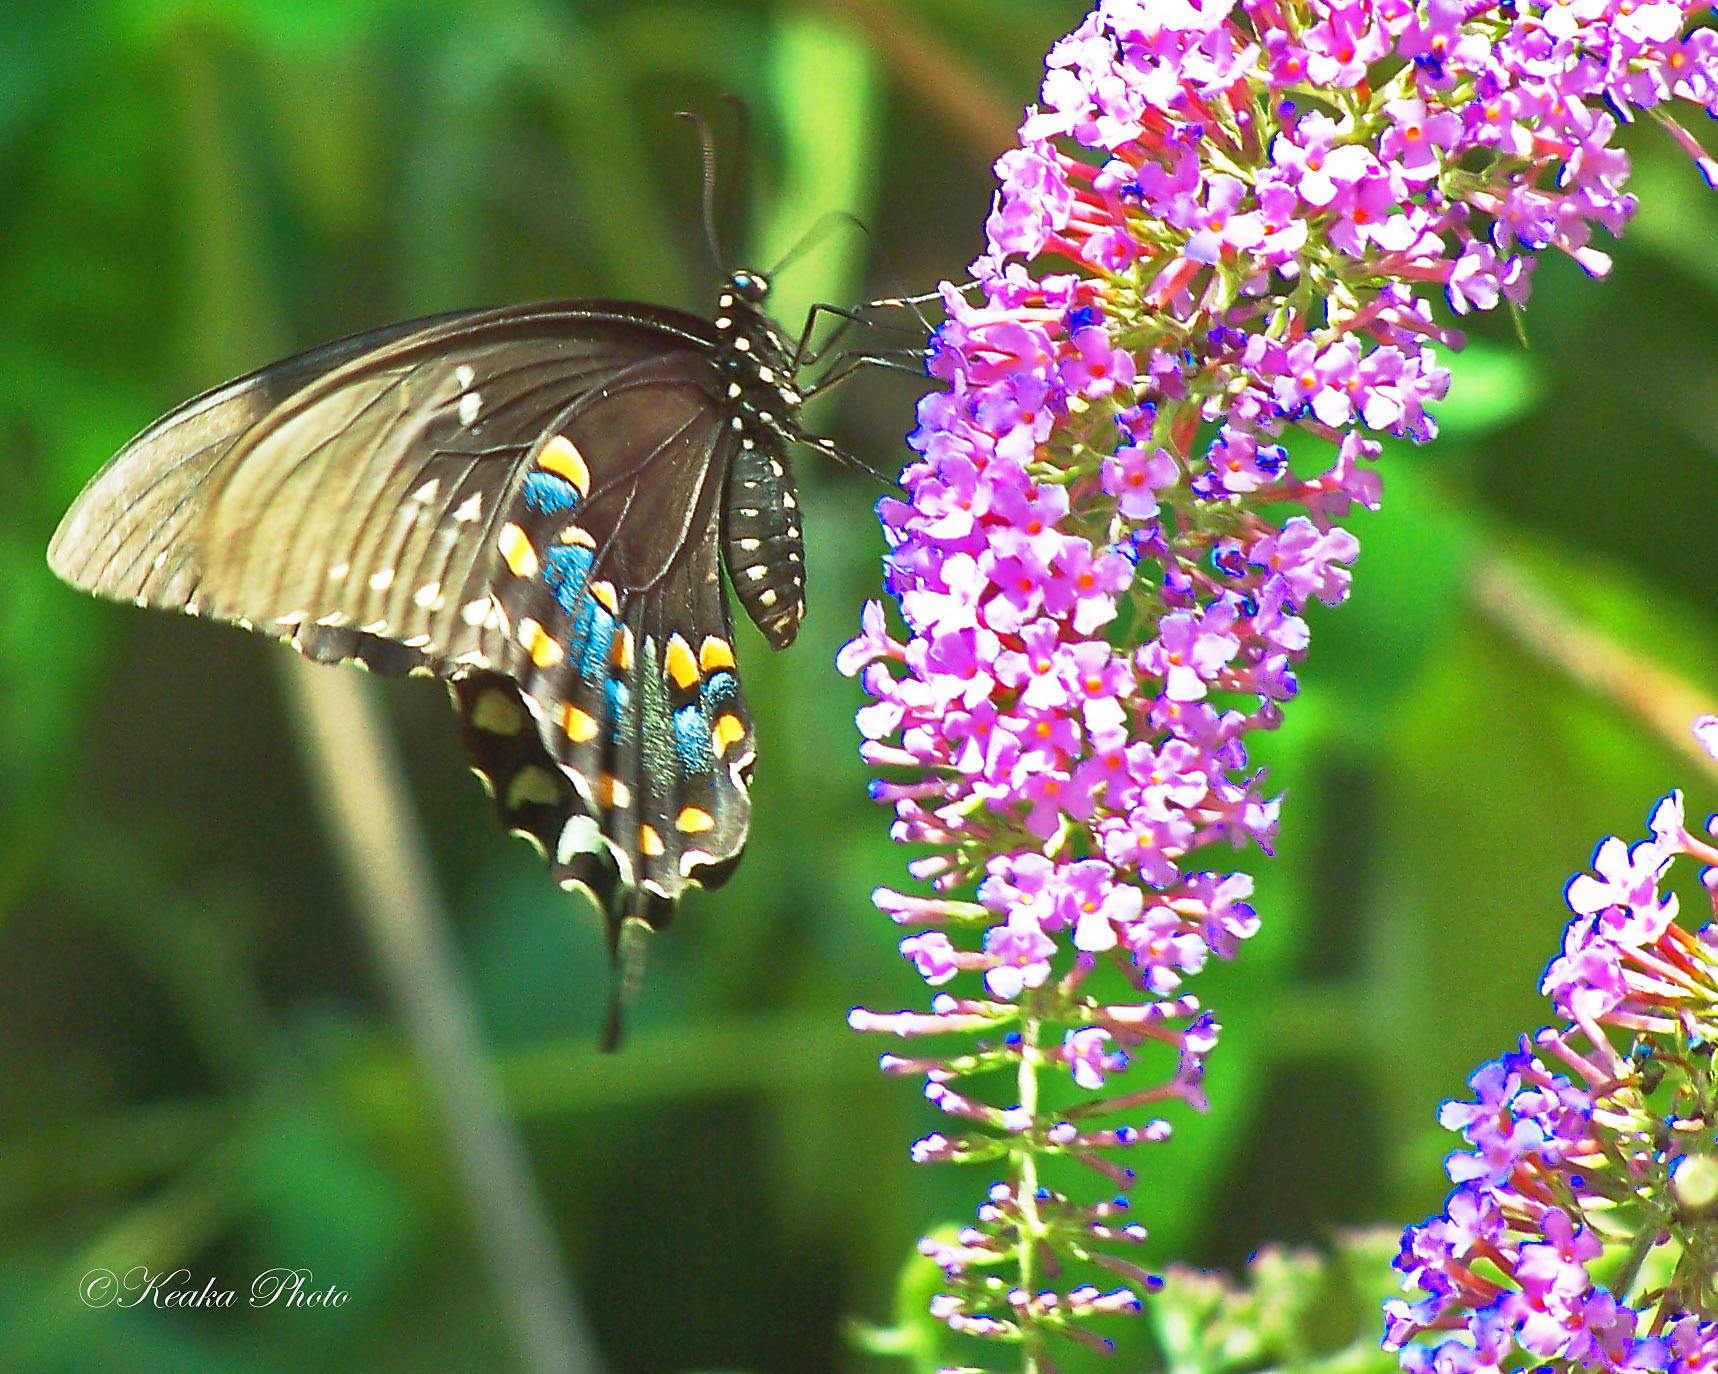 butterflies from my back Yard